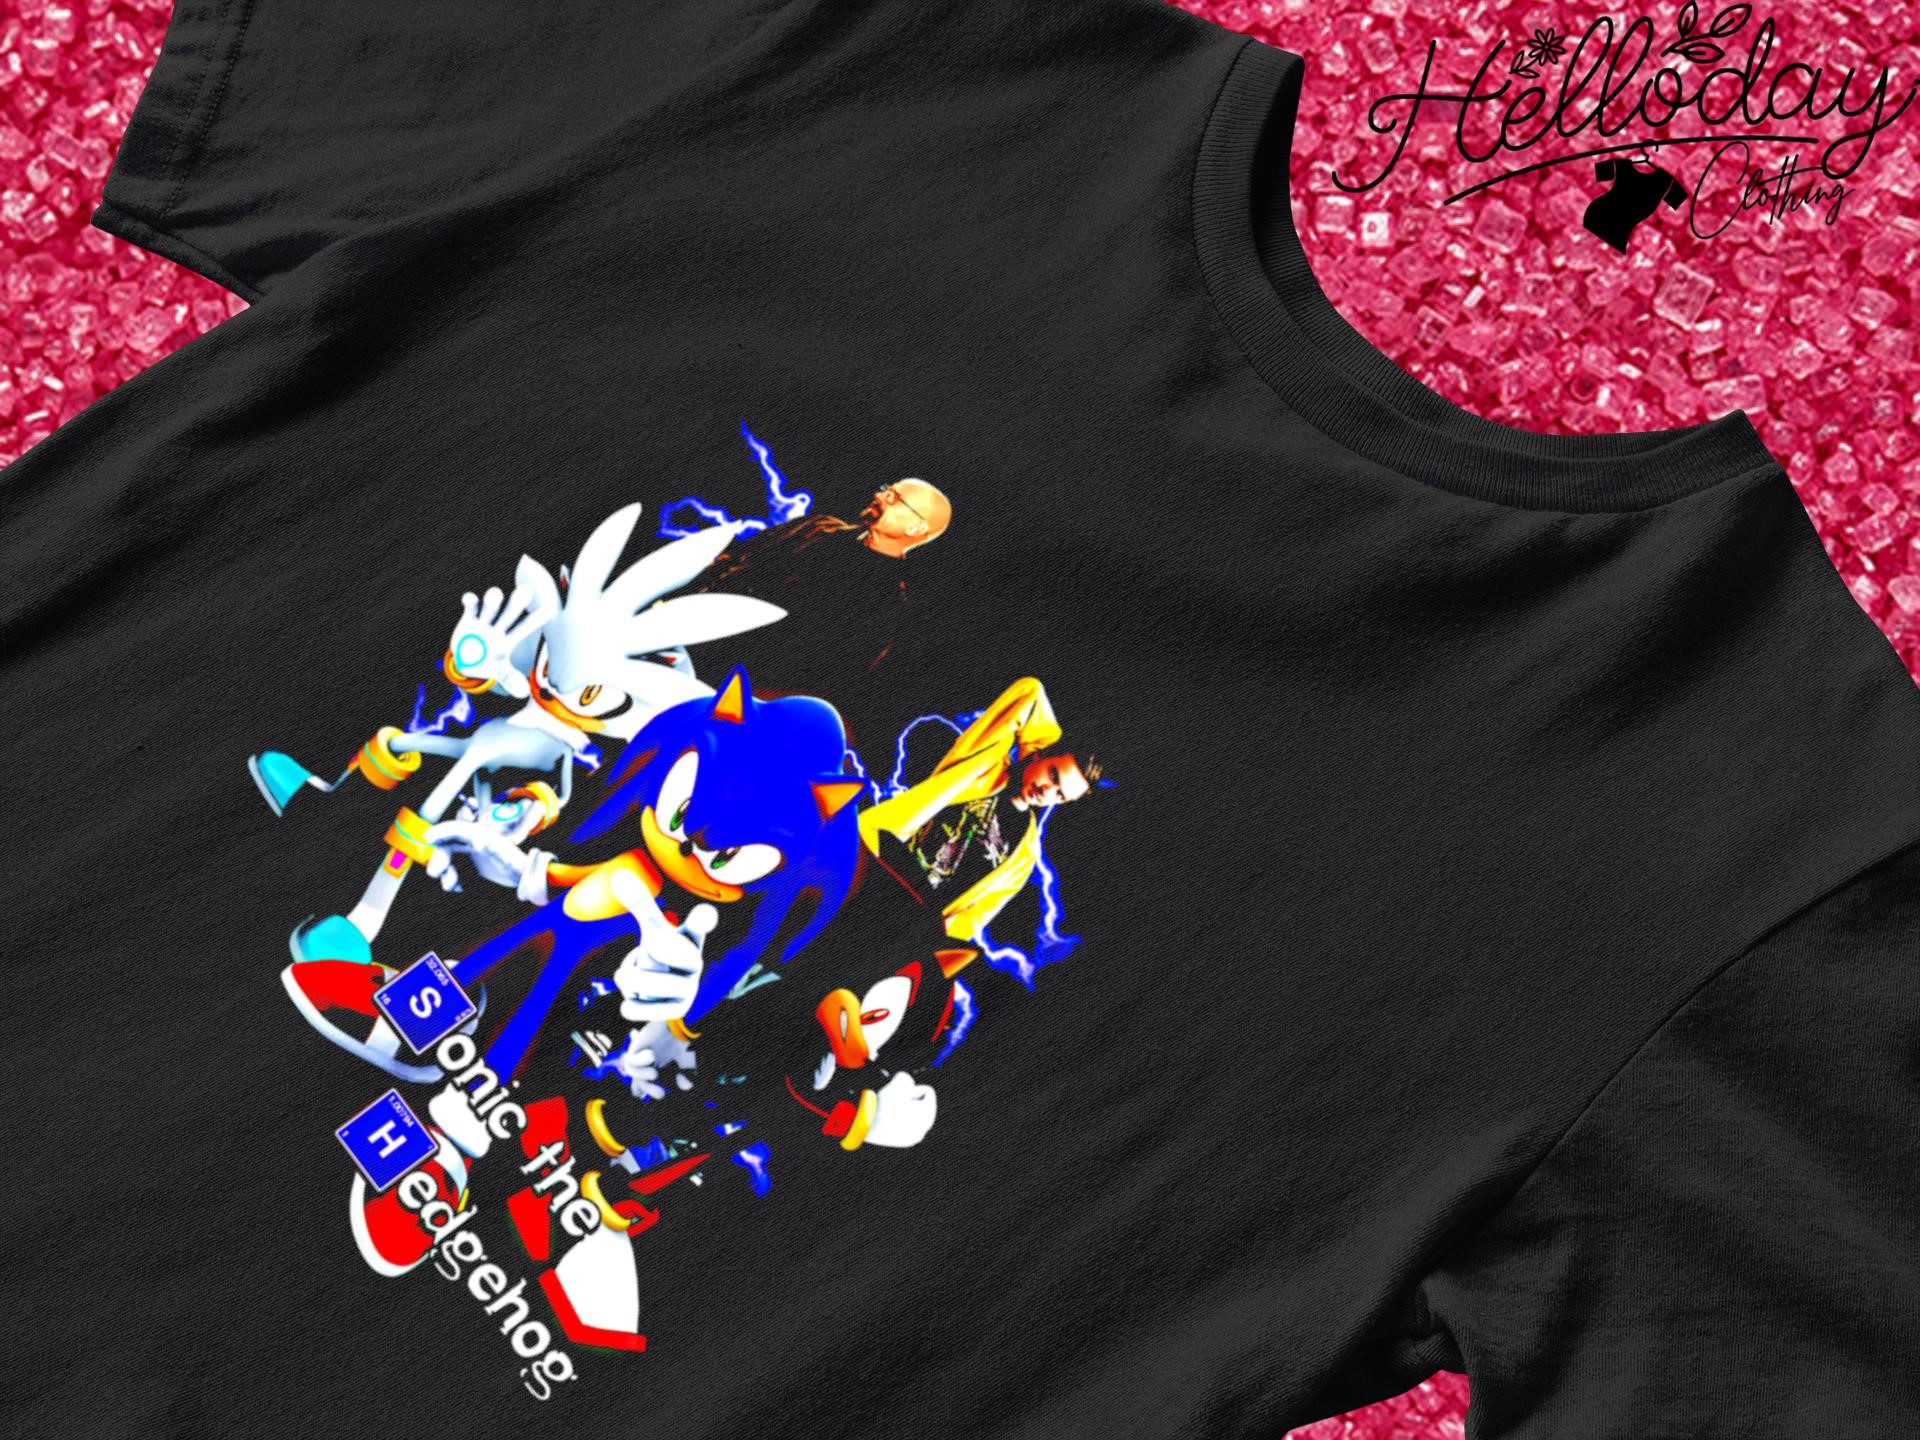 Sonic the Hedgehog Breaking Bad shirt